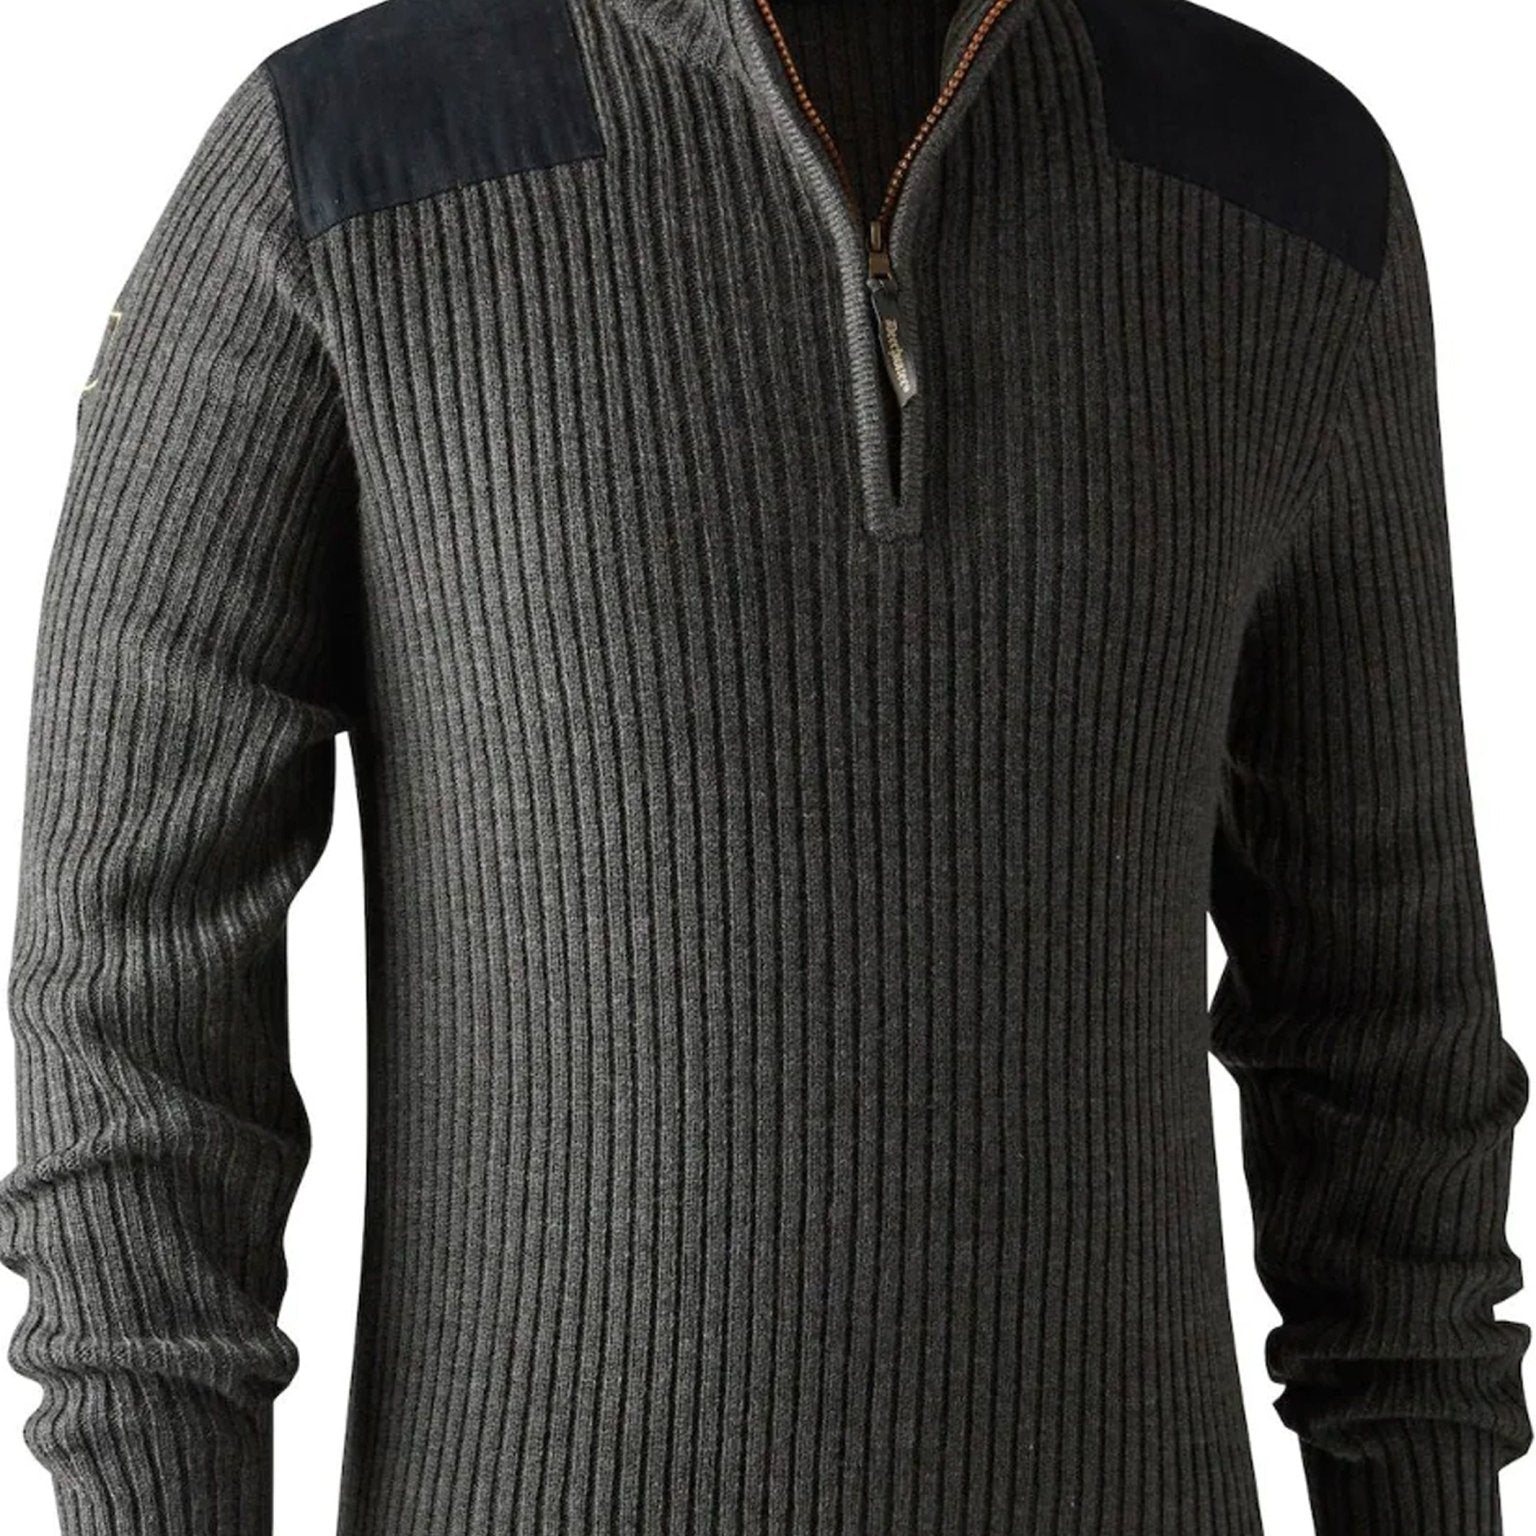 4elementsclothingDeerhunterDeerhunter - Rogaland knit pullover / jumper with quarter ZipKnitwear8726-957-S